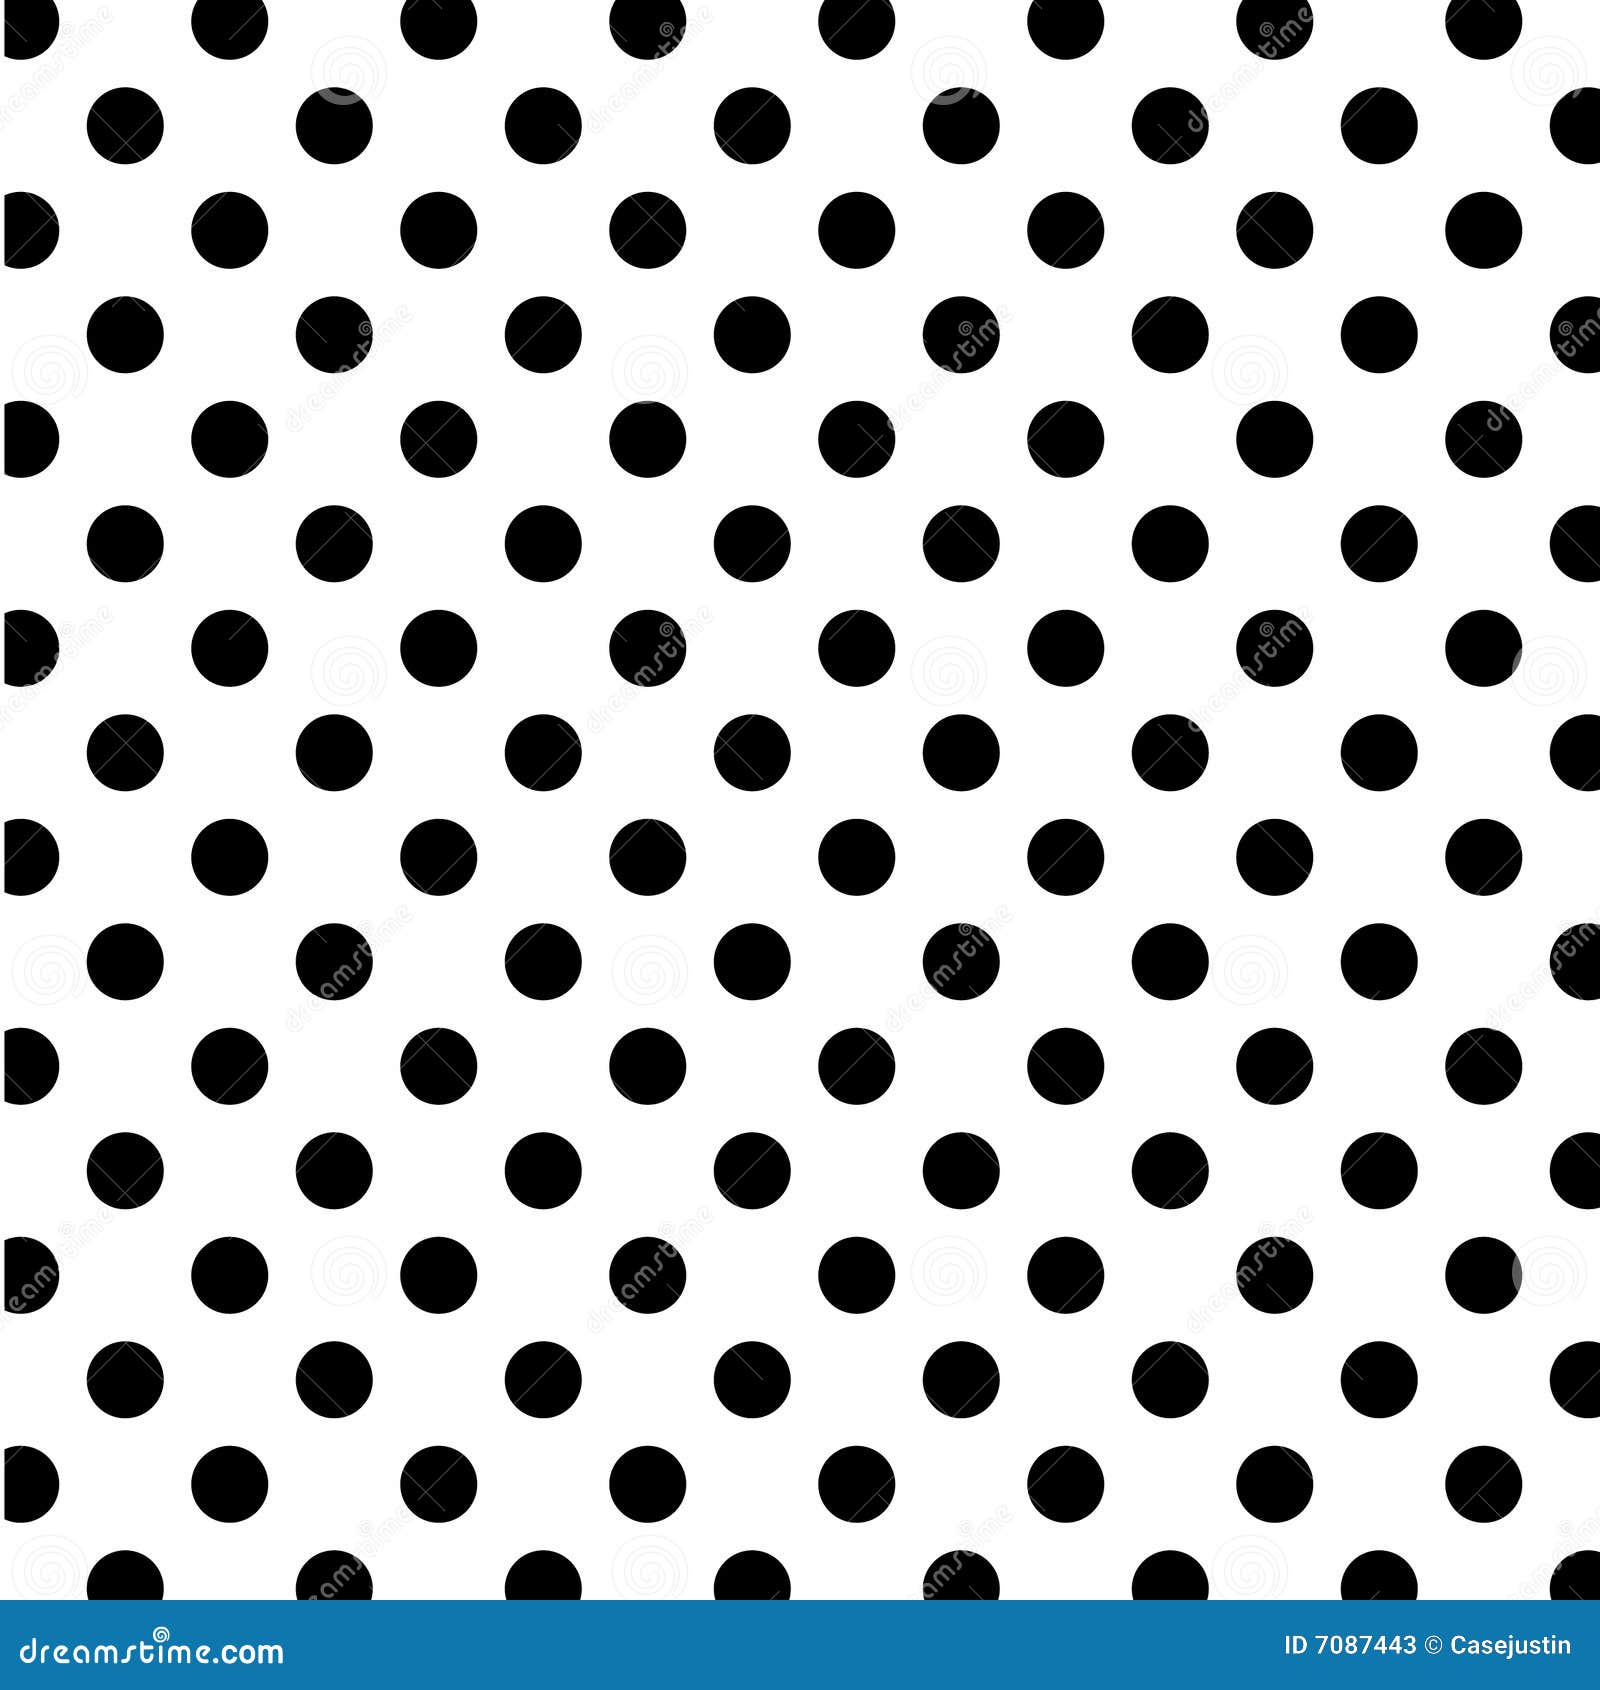 big black polka dots on white, seamless background